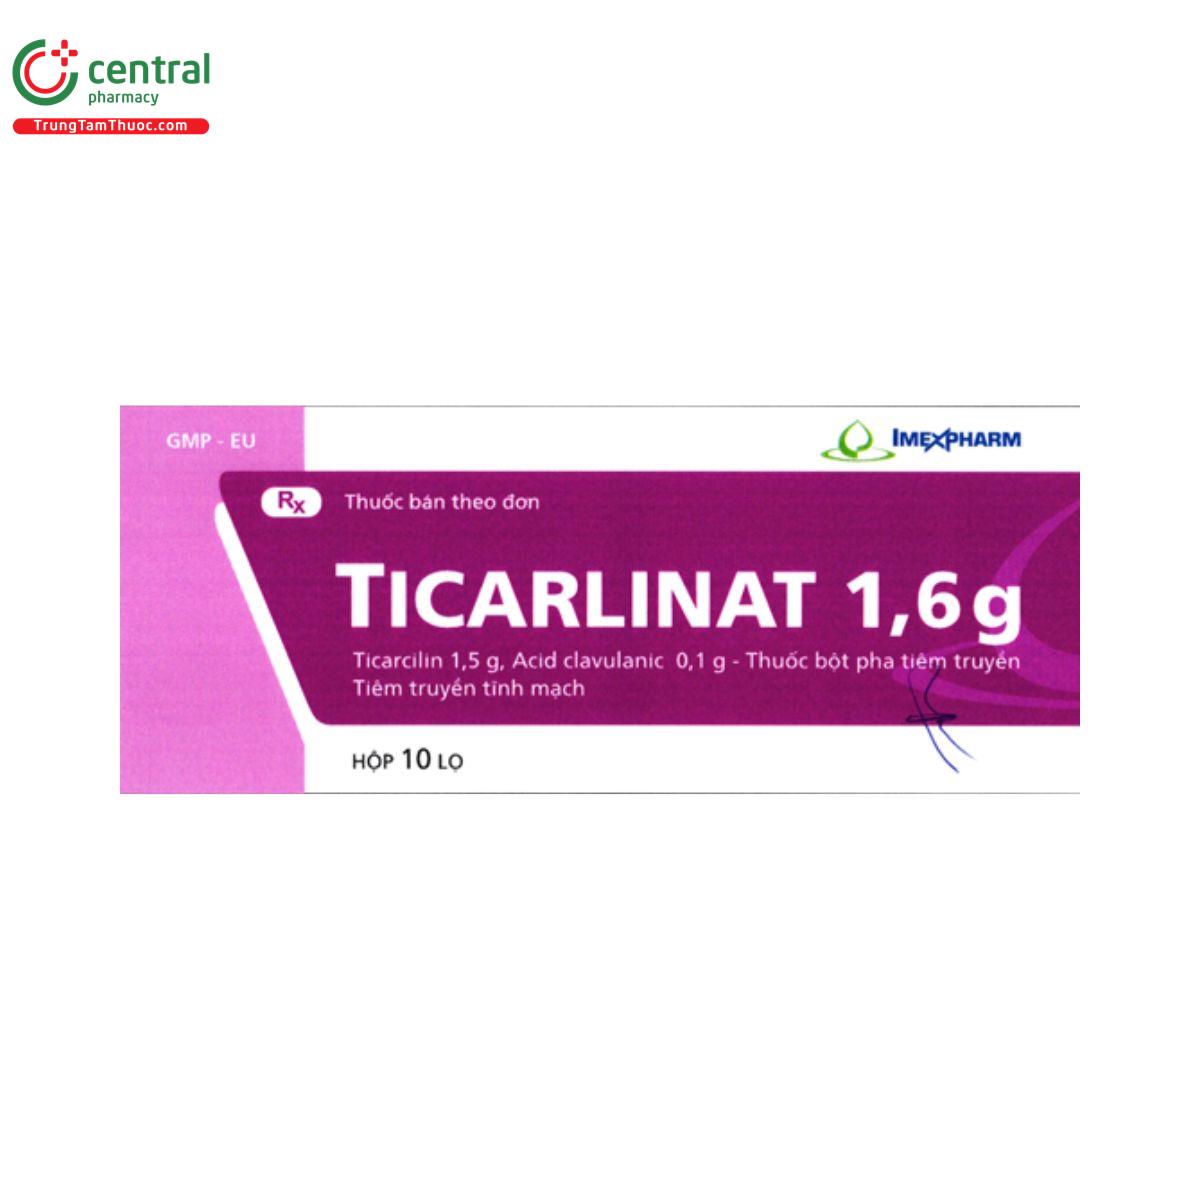 ticarlinat 1 6g 1 B0238